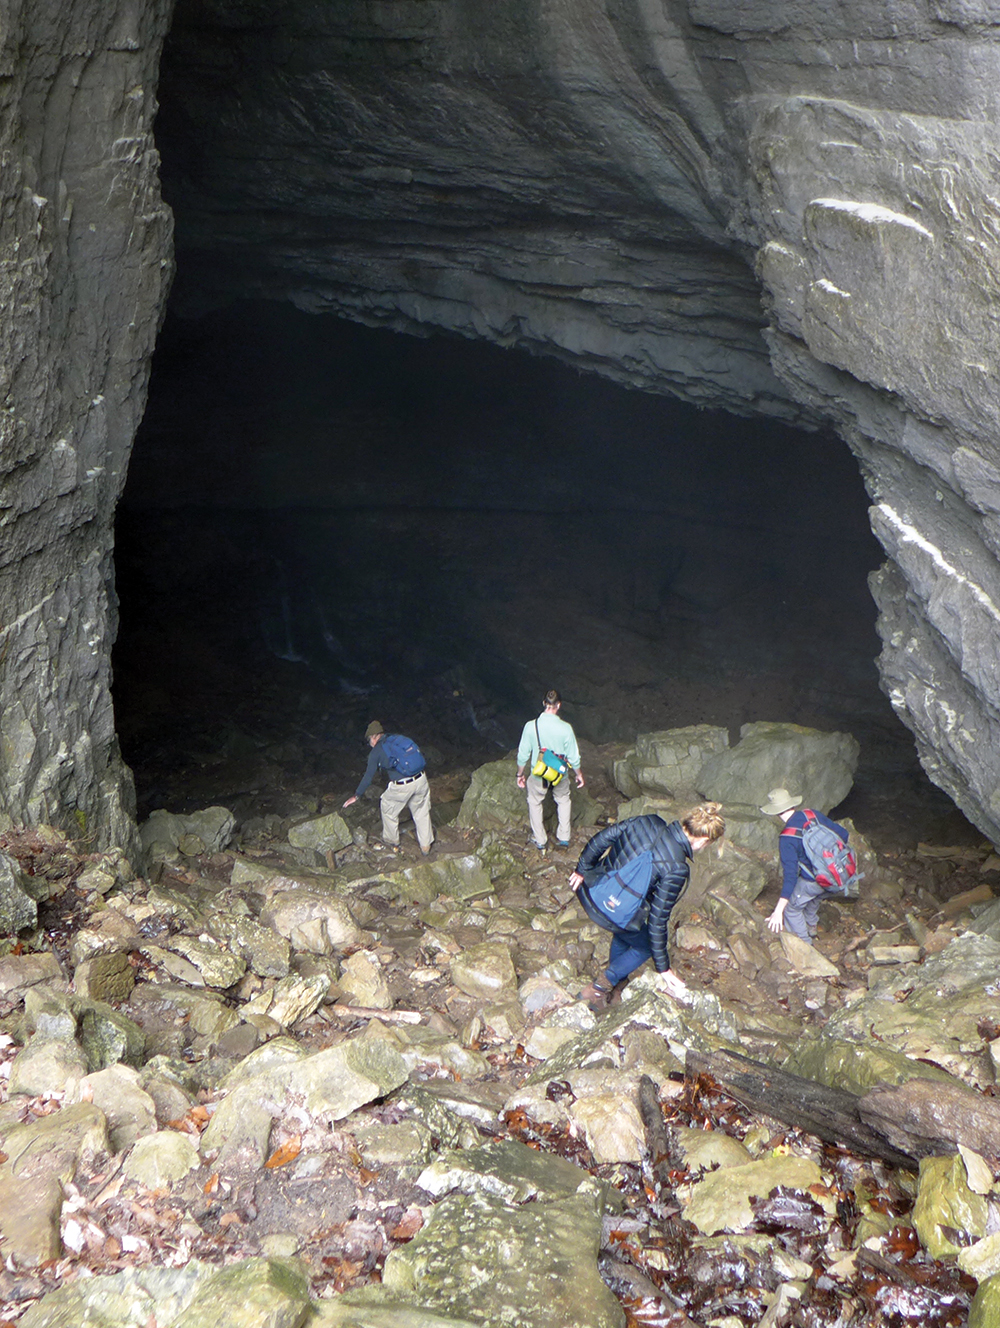 The Stephens Gap Cave